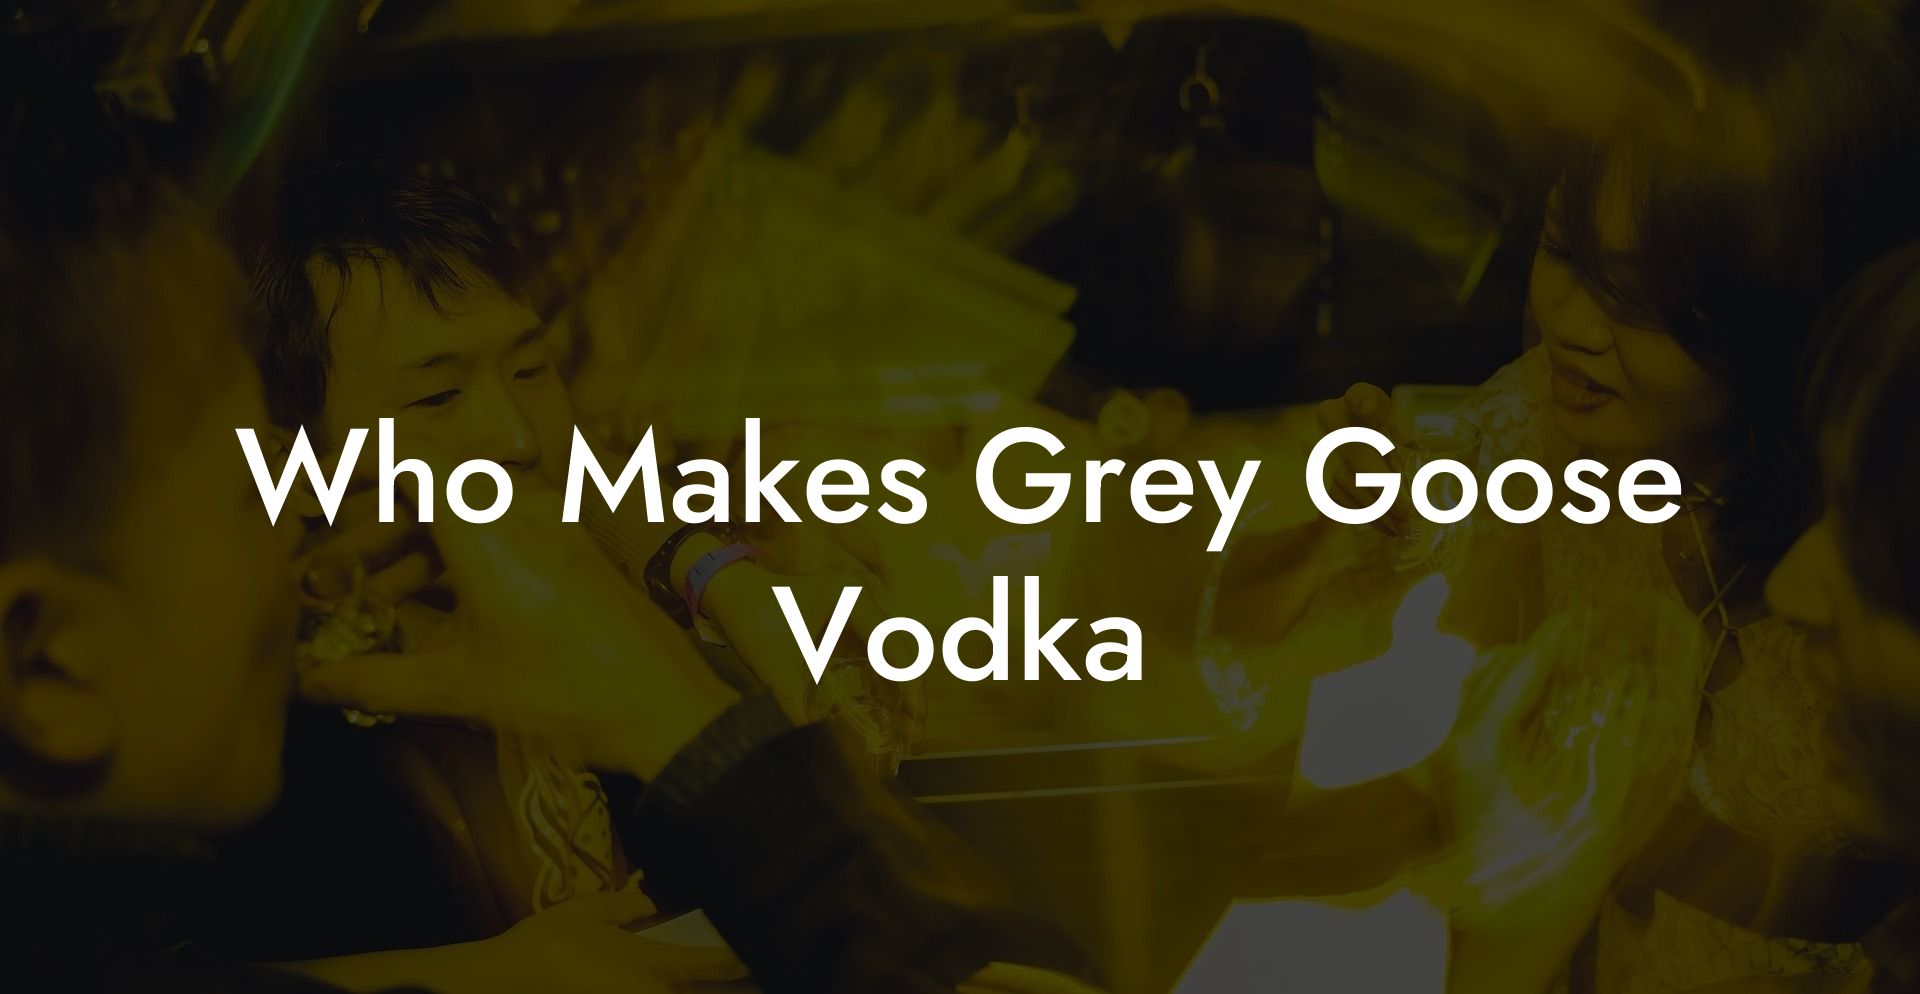 Who Makes Grey Goose Vodka